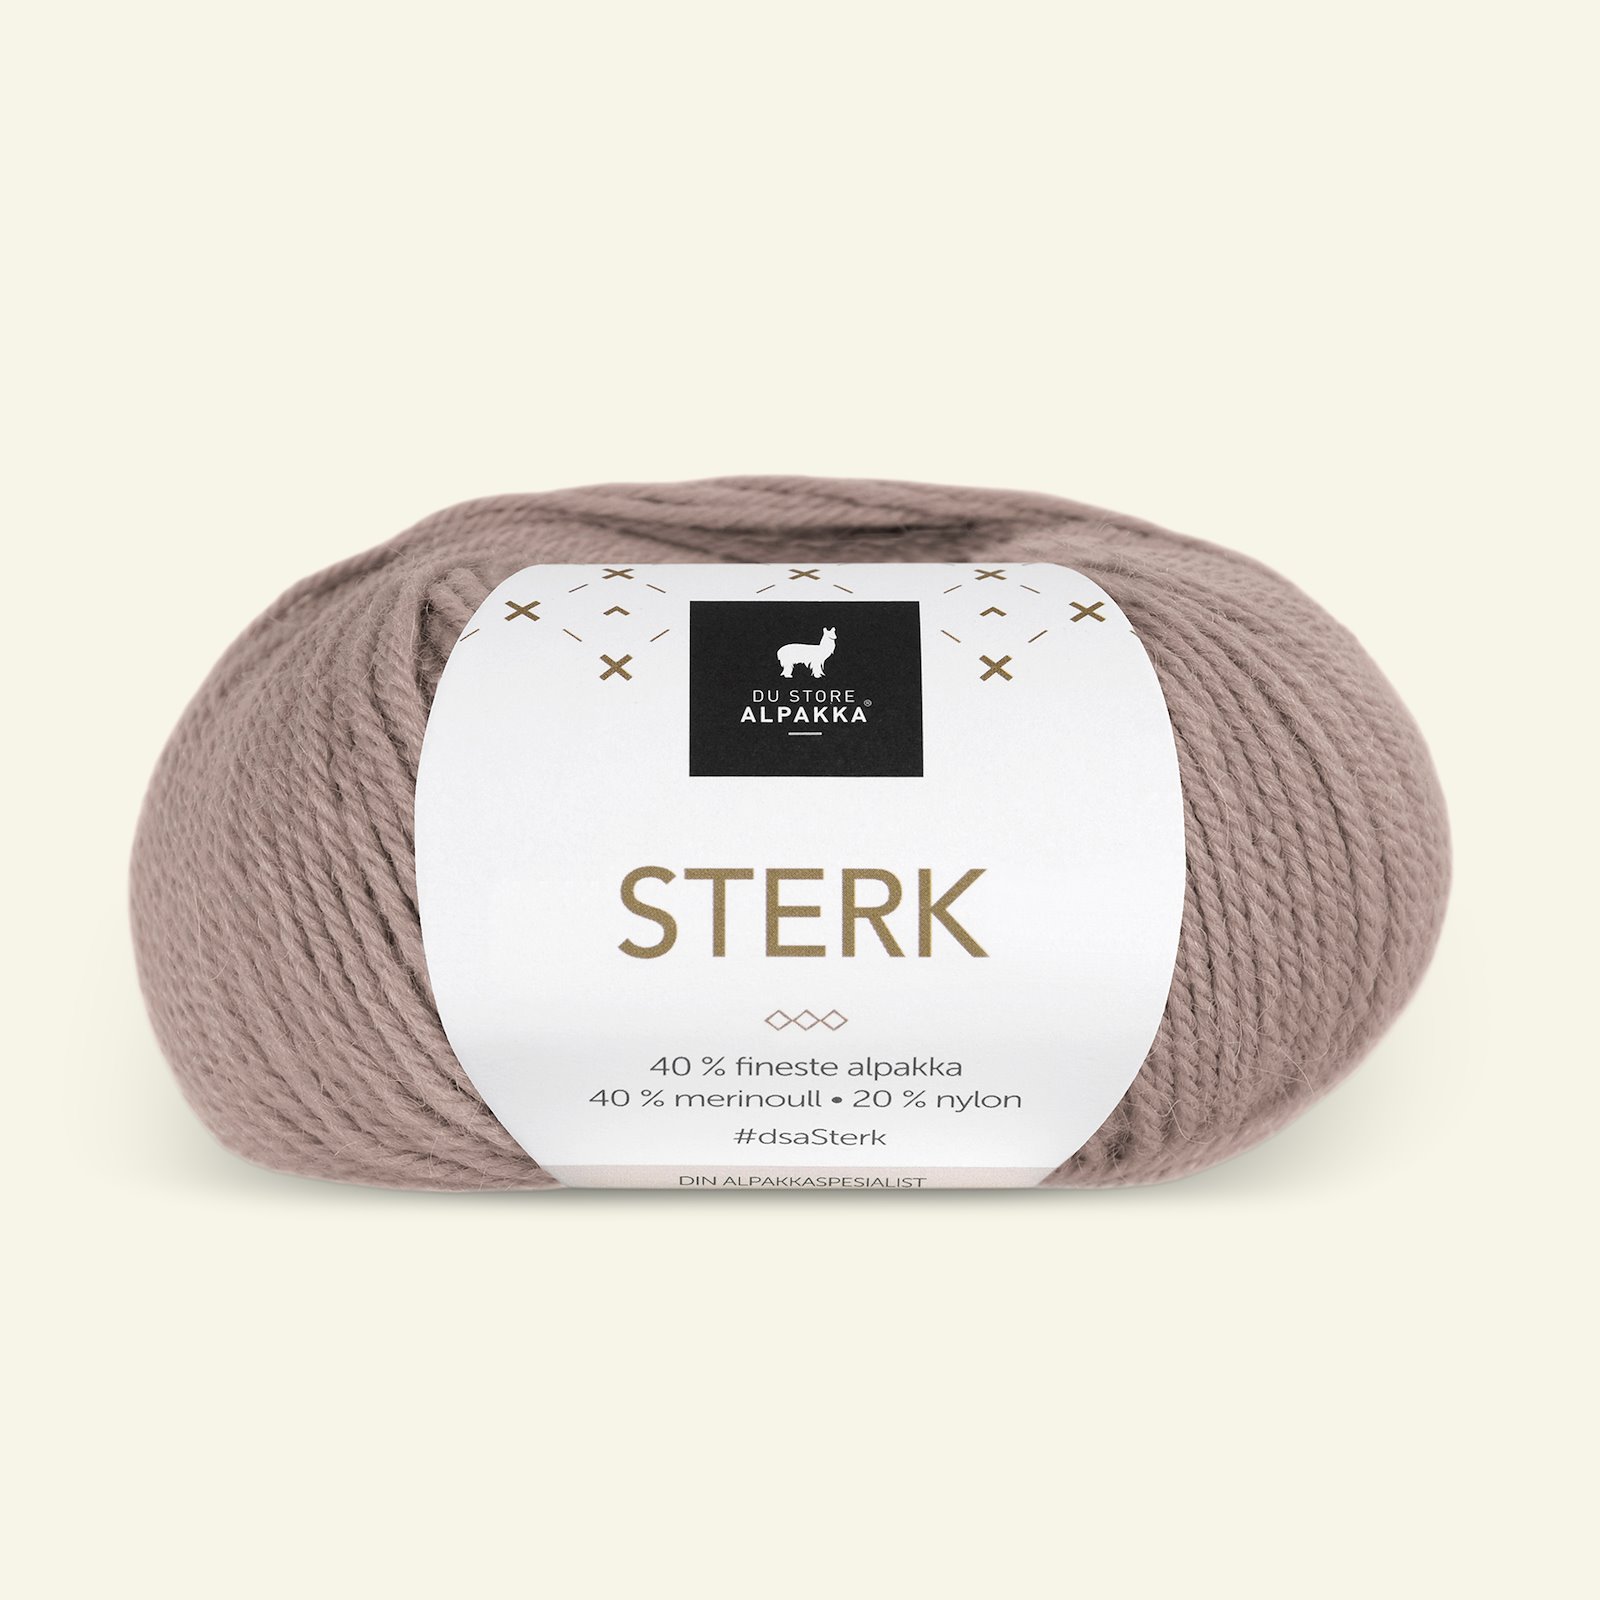 Du Store Alpakka, alpaca merino blandingsgarn, "Sterk", beige (854) 90000678_pack